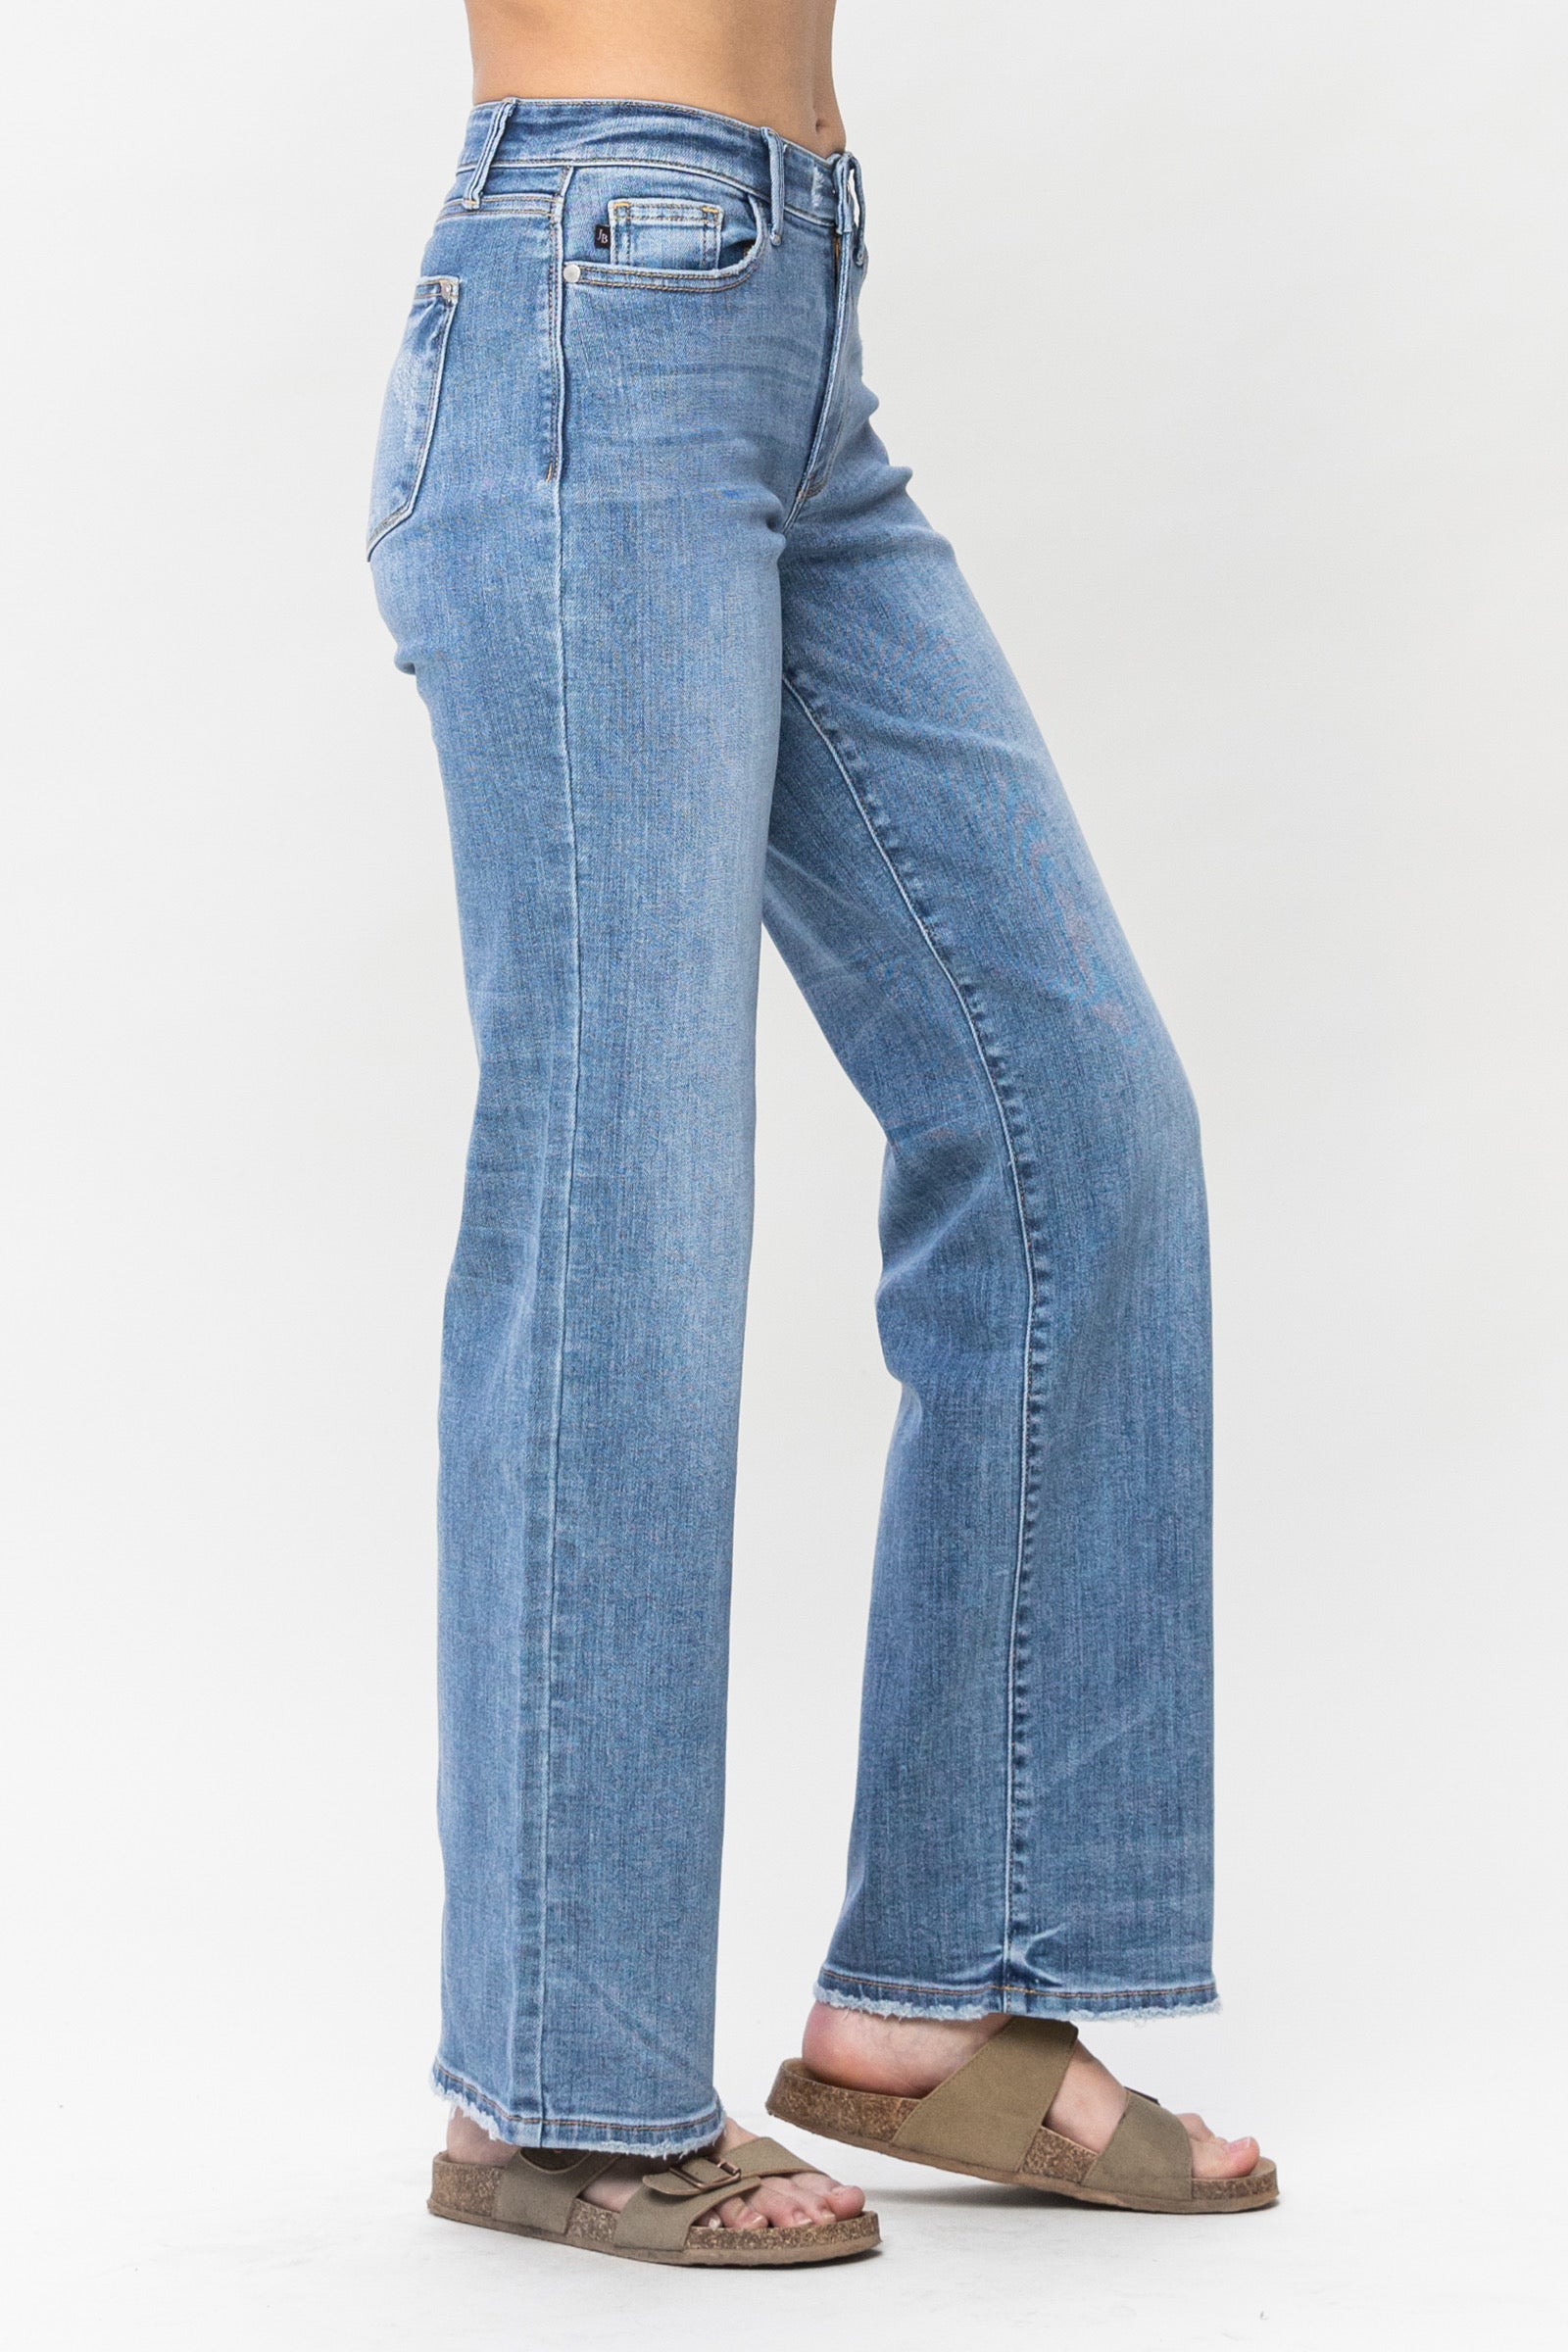 Judy Blue Vintage Wash Jeans Wide 